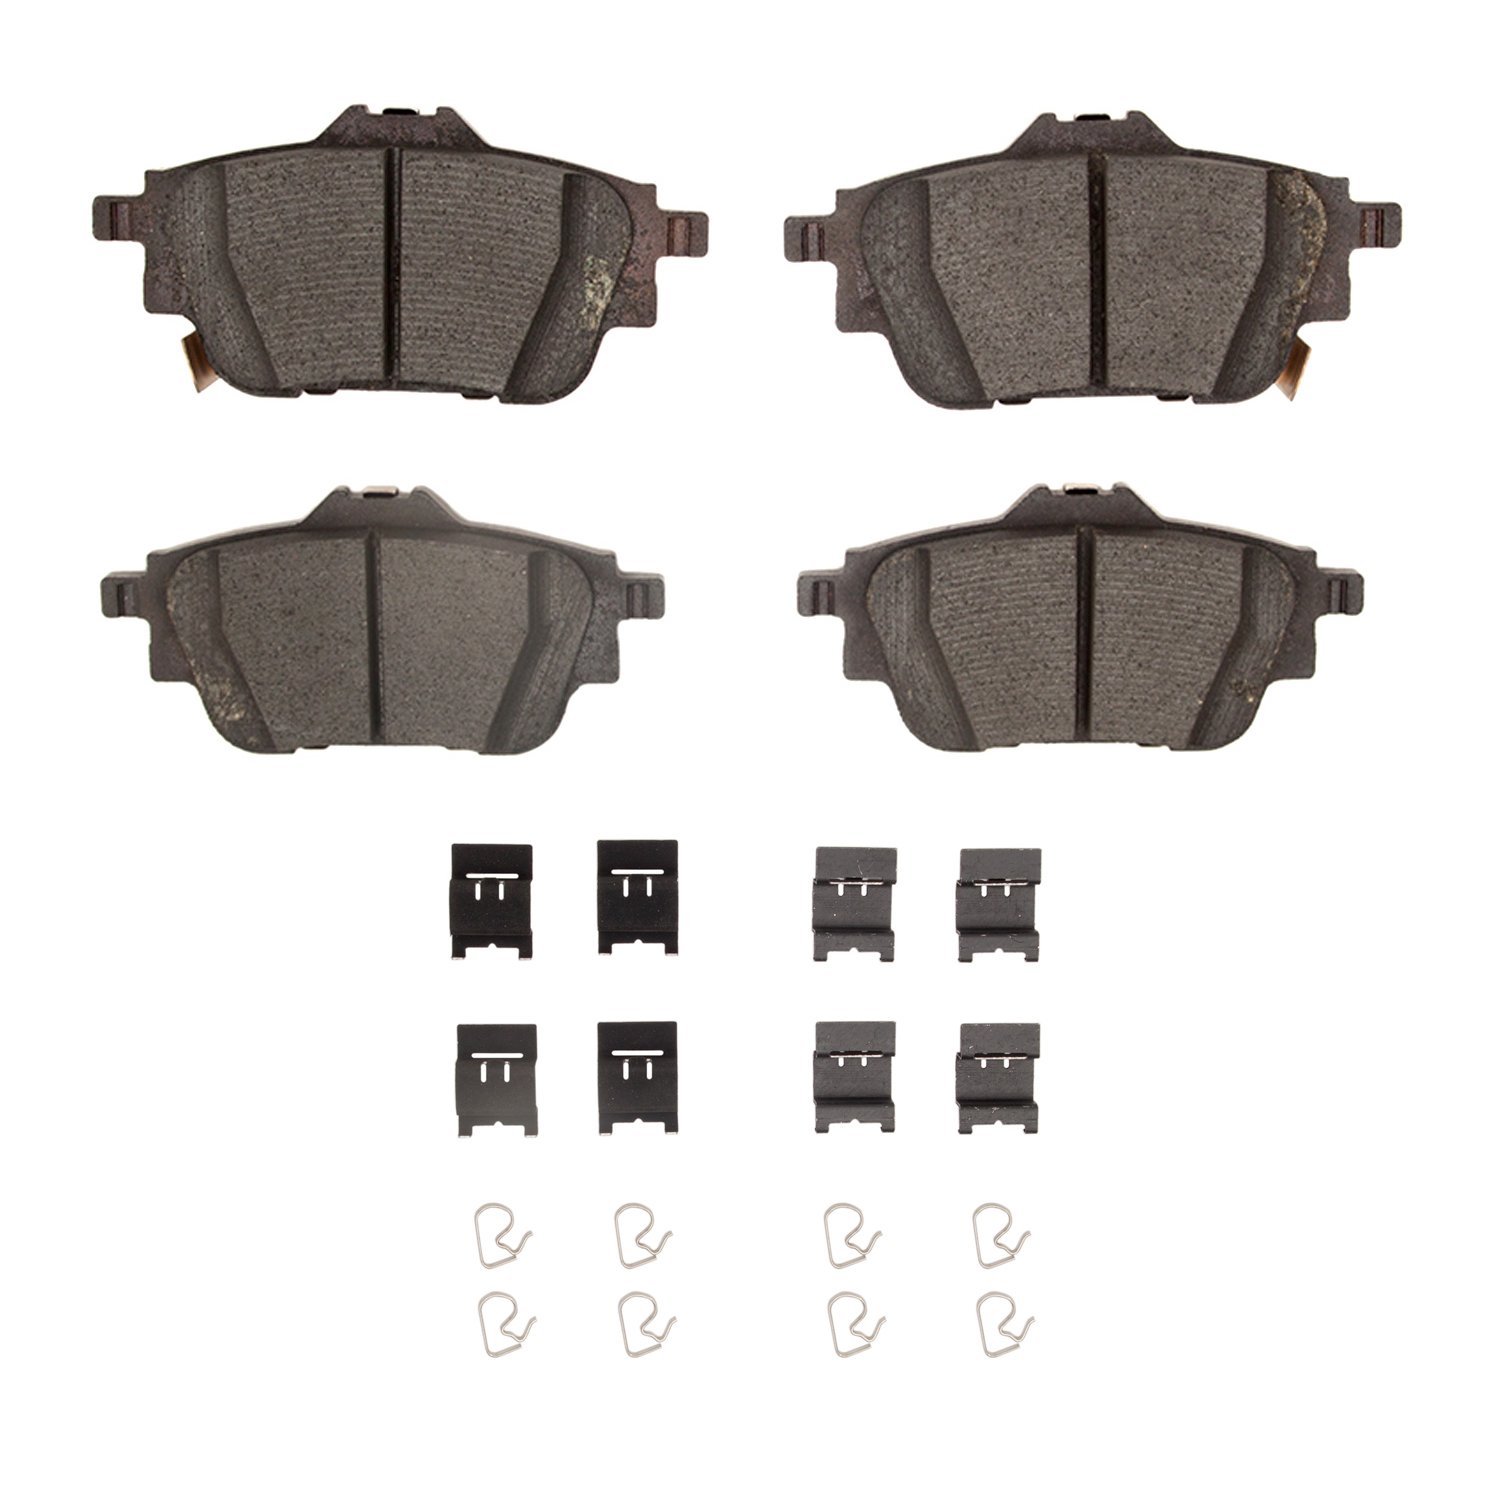 Ceramic Brake Pads & Hardware Kit, Fits Select